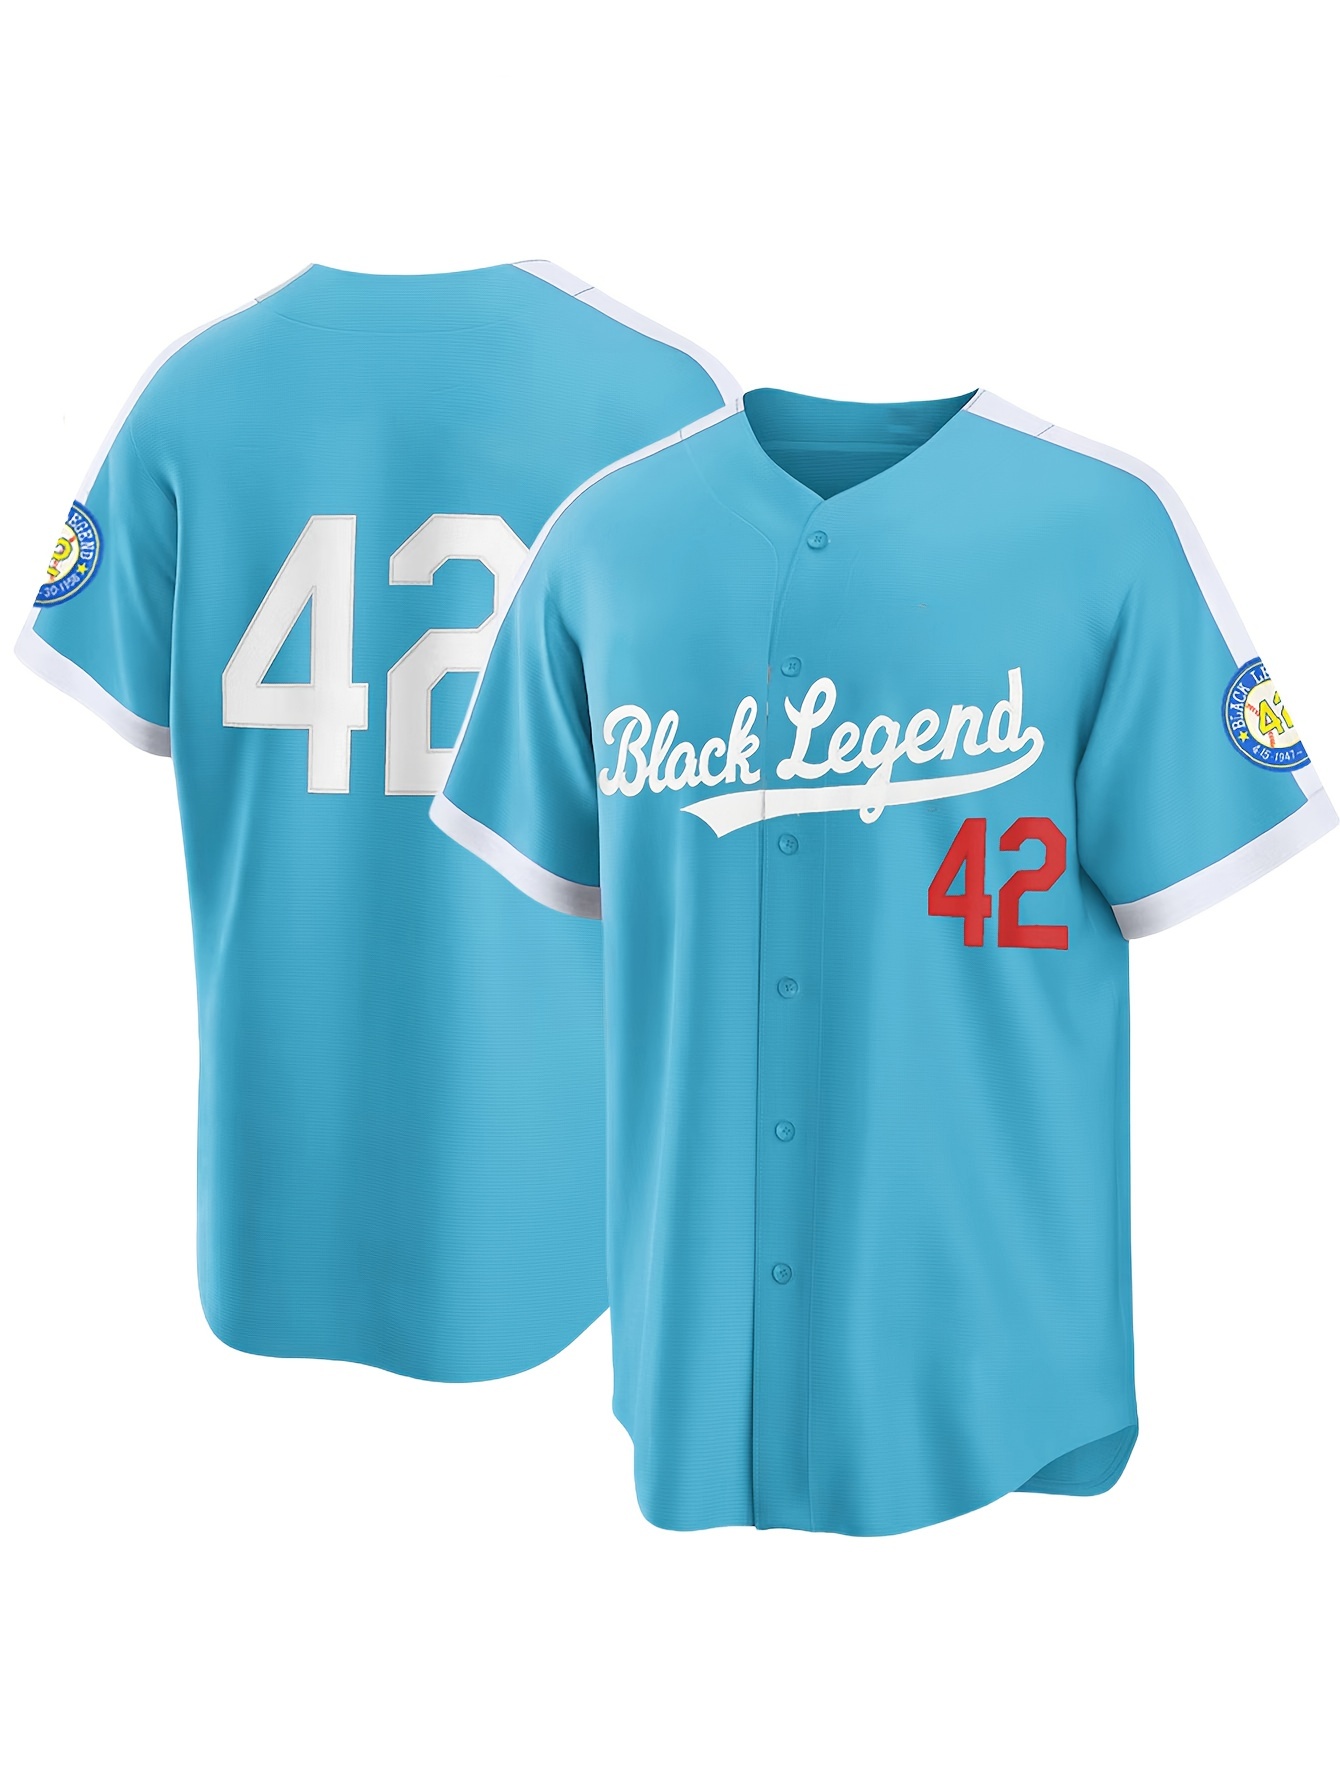 Mens Black Legend 42 Baseball Jersey Retro Classic Baseball Shirt